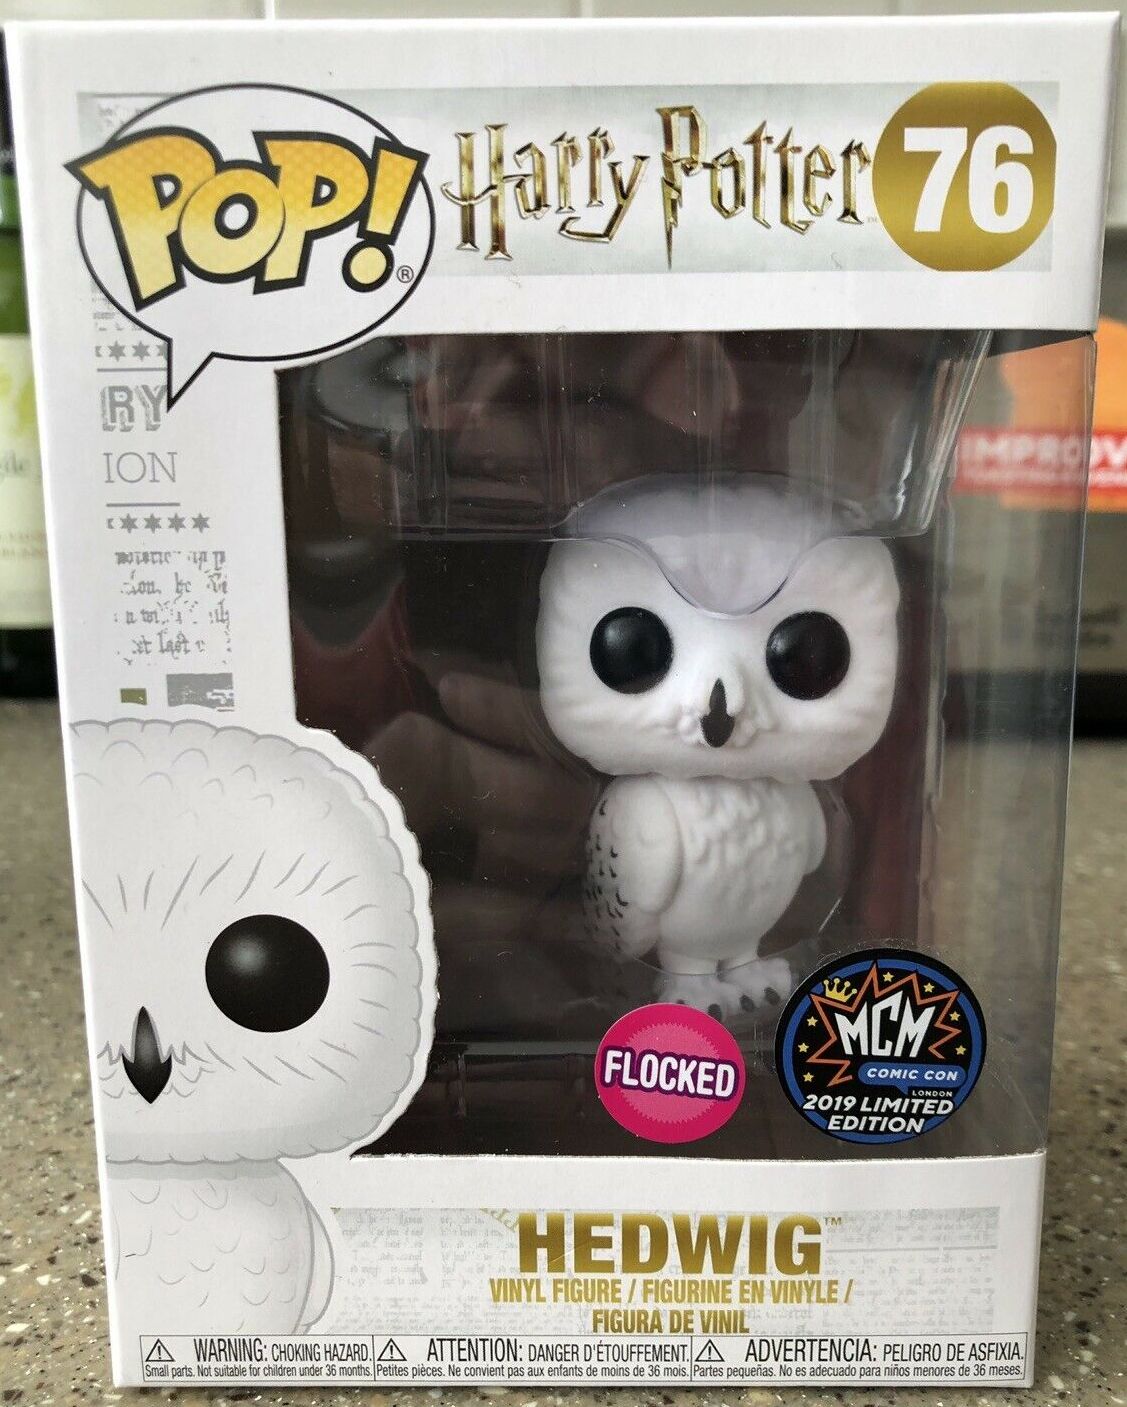 Harry Potter Pop! Vinyl Funko - Hedwig flocked MCM #76